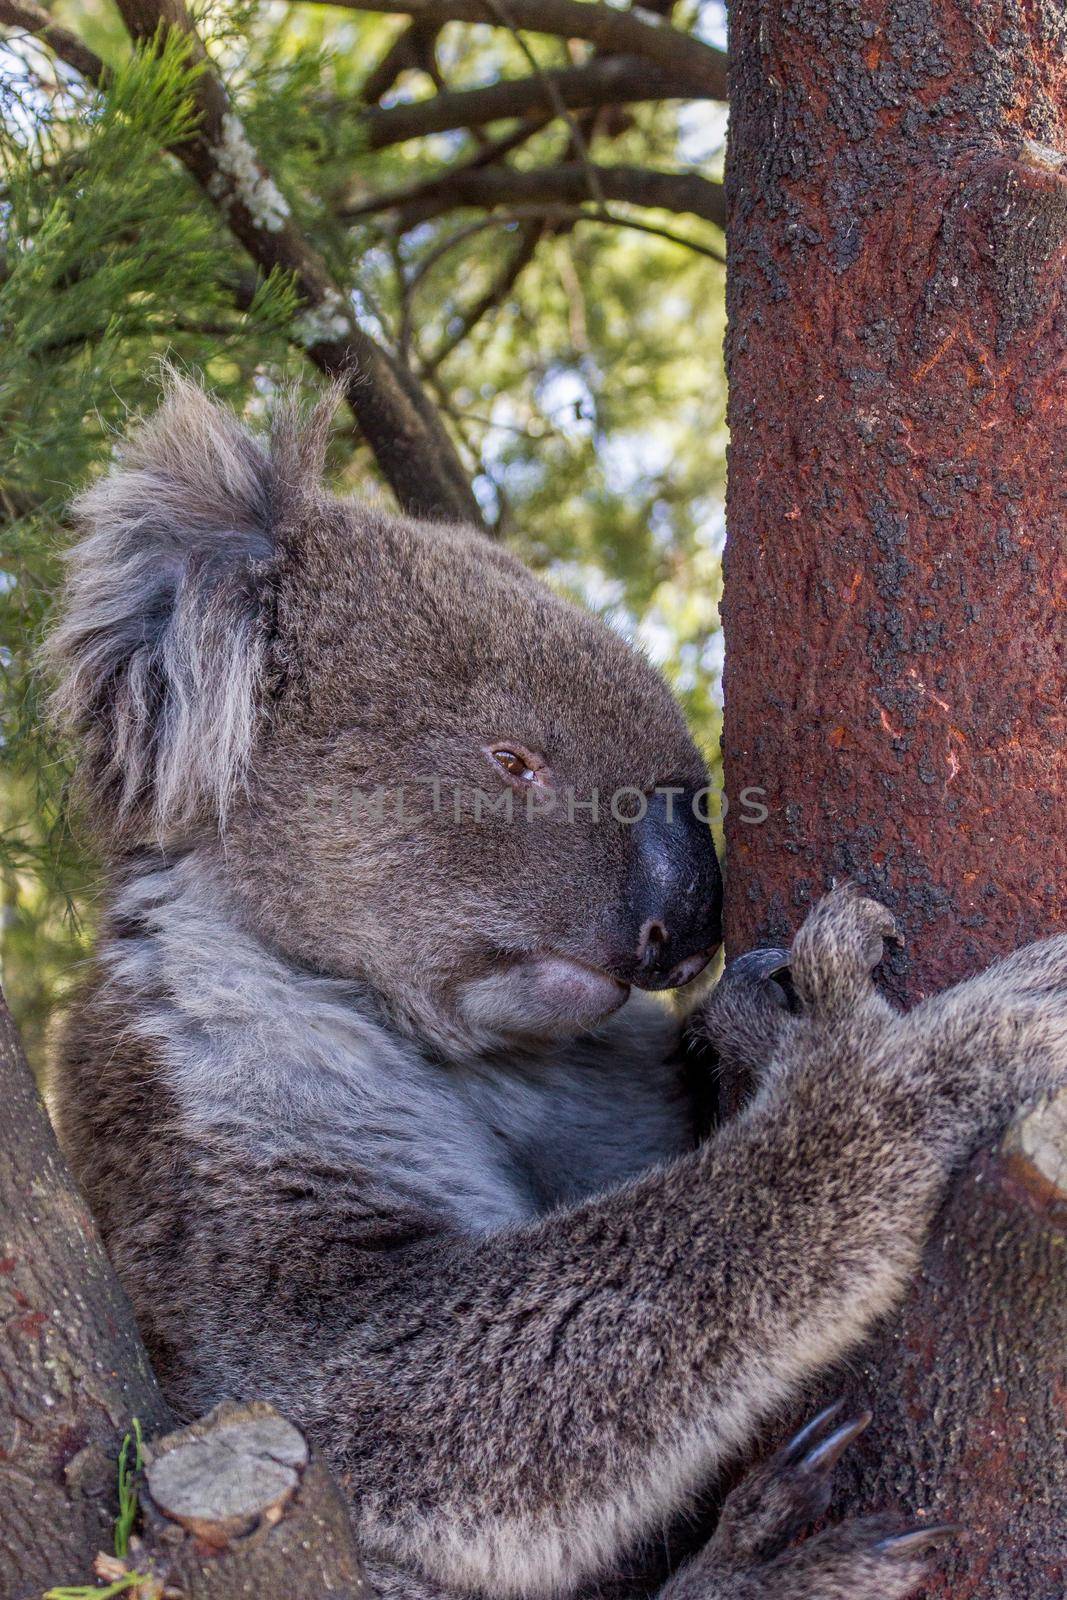 Wild Koala at Mt. Lofty Walk, South Austrlia, Australia by bettercallcurry